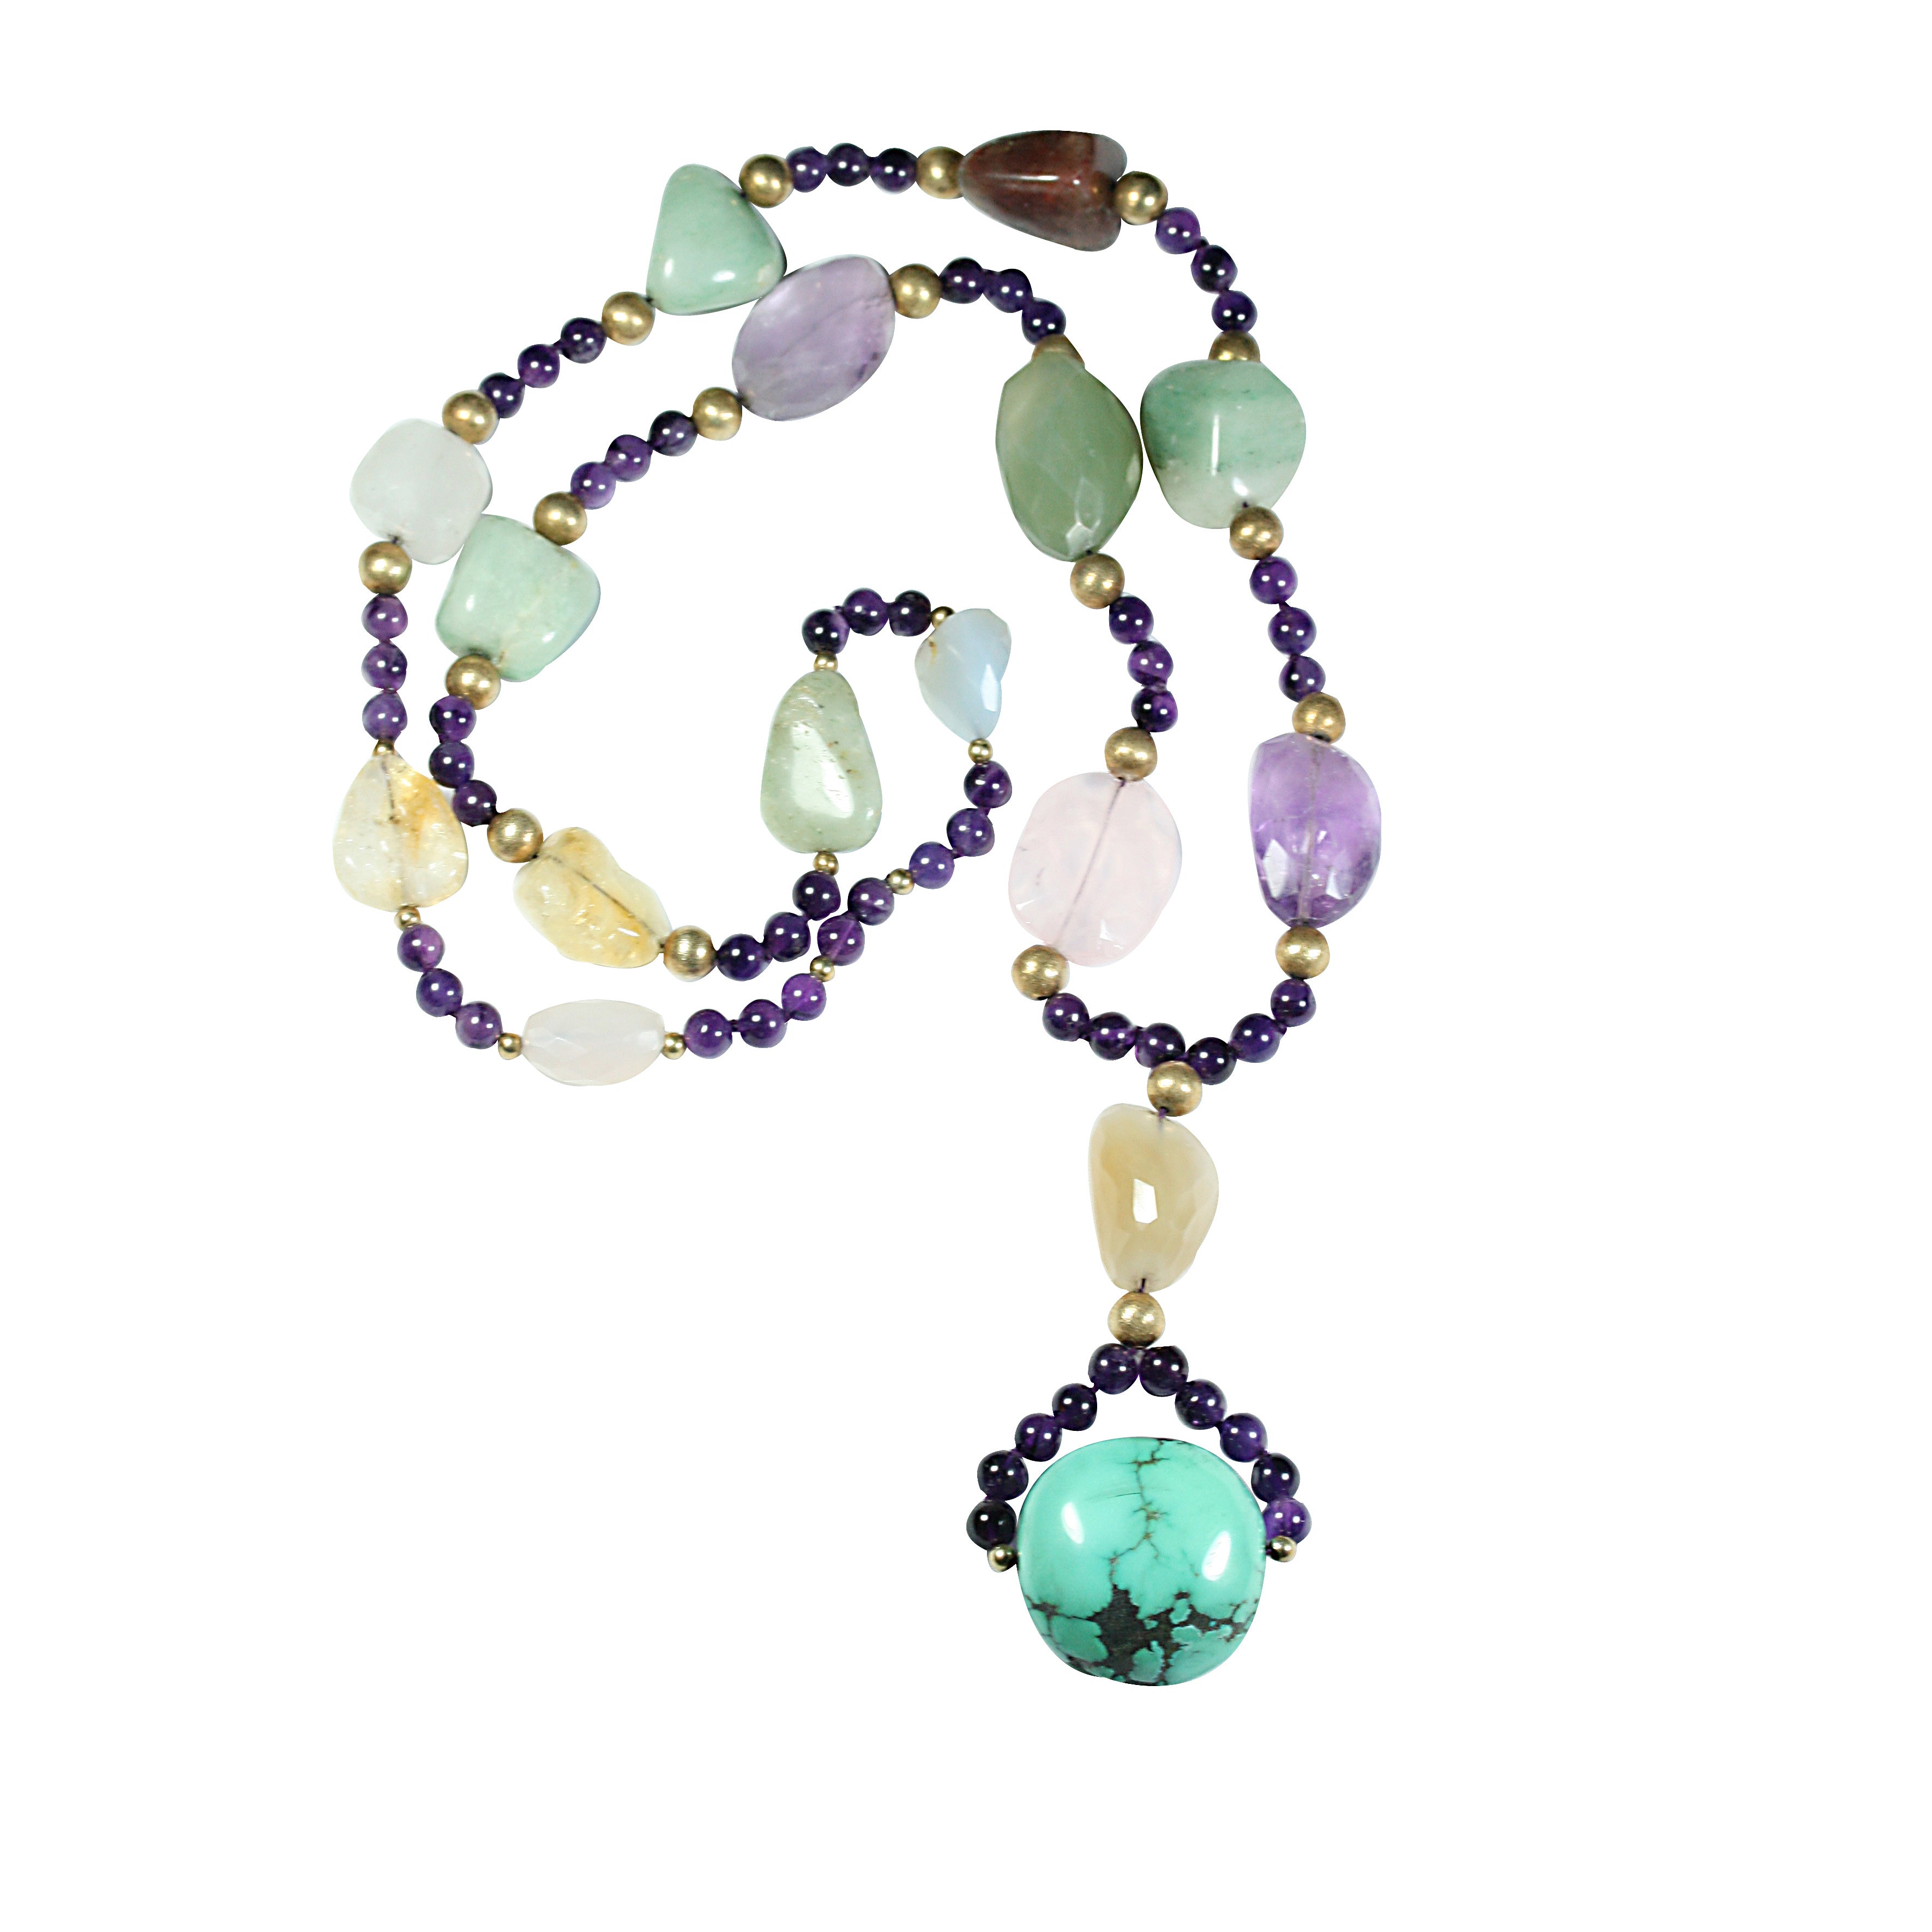 Rock cristal, pink quartz, turquoise, calchedony long multicolored necklace